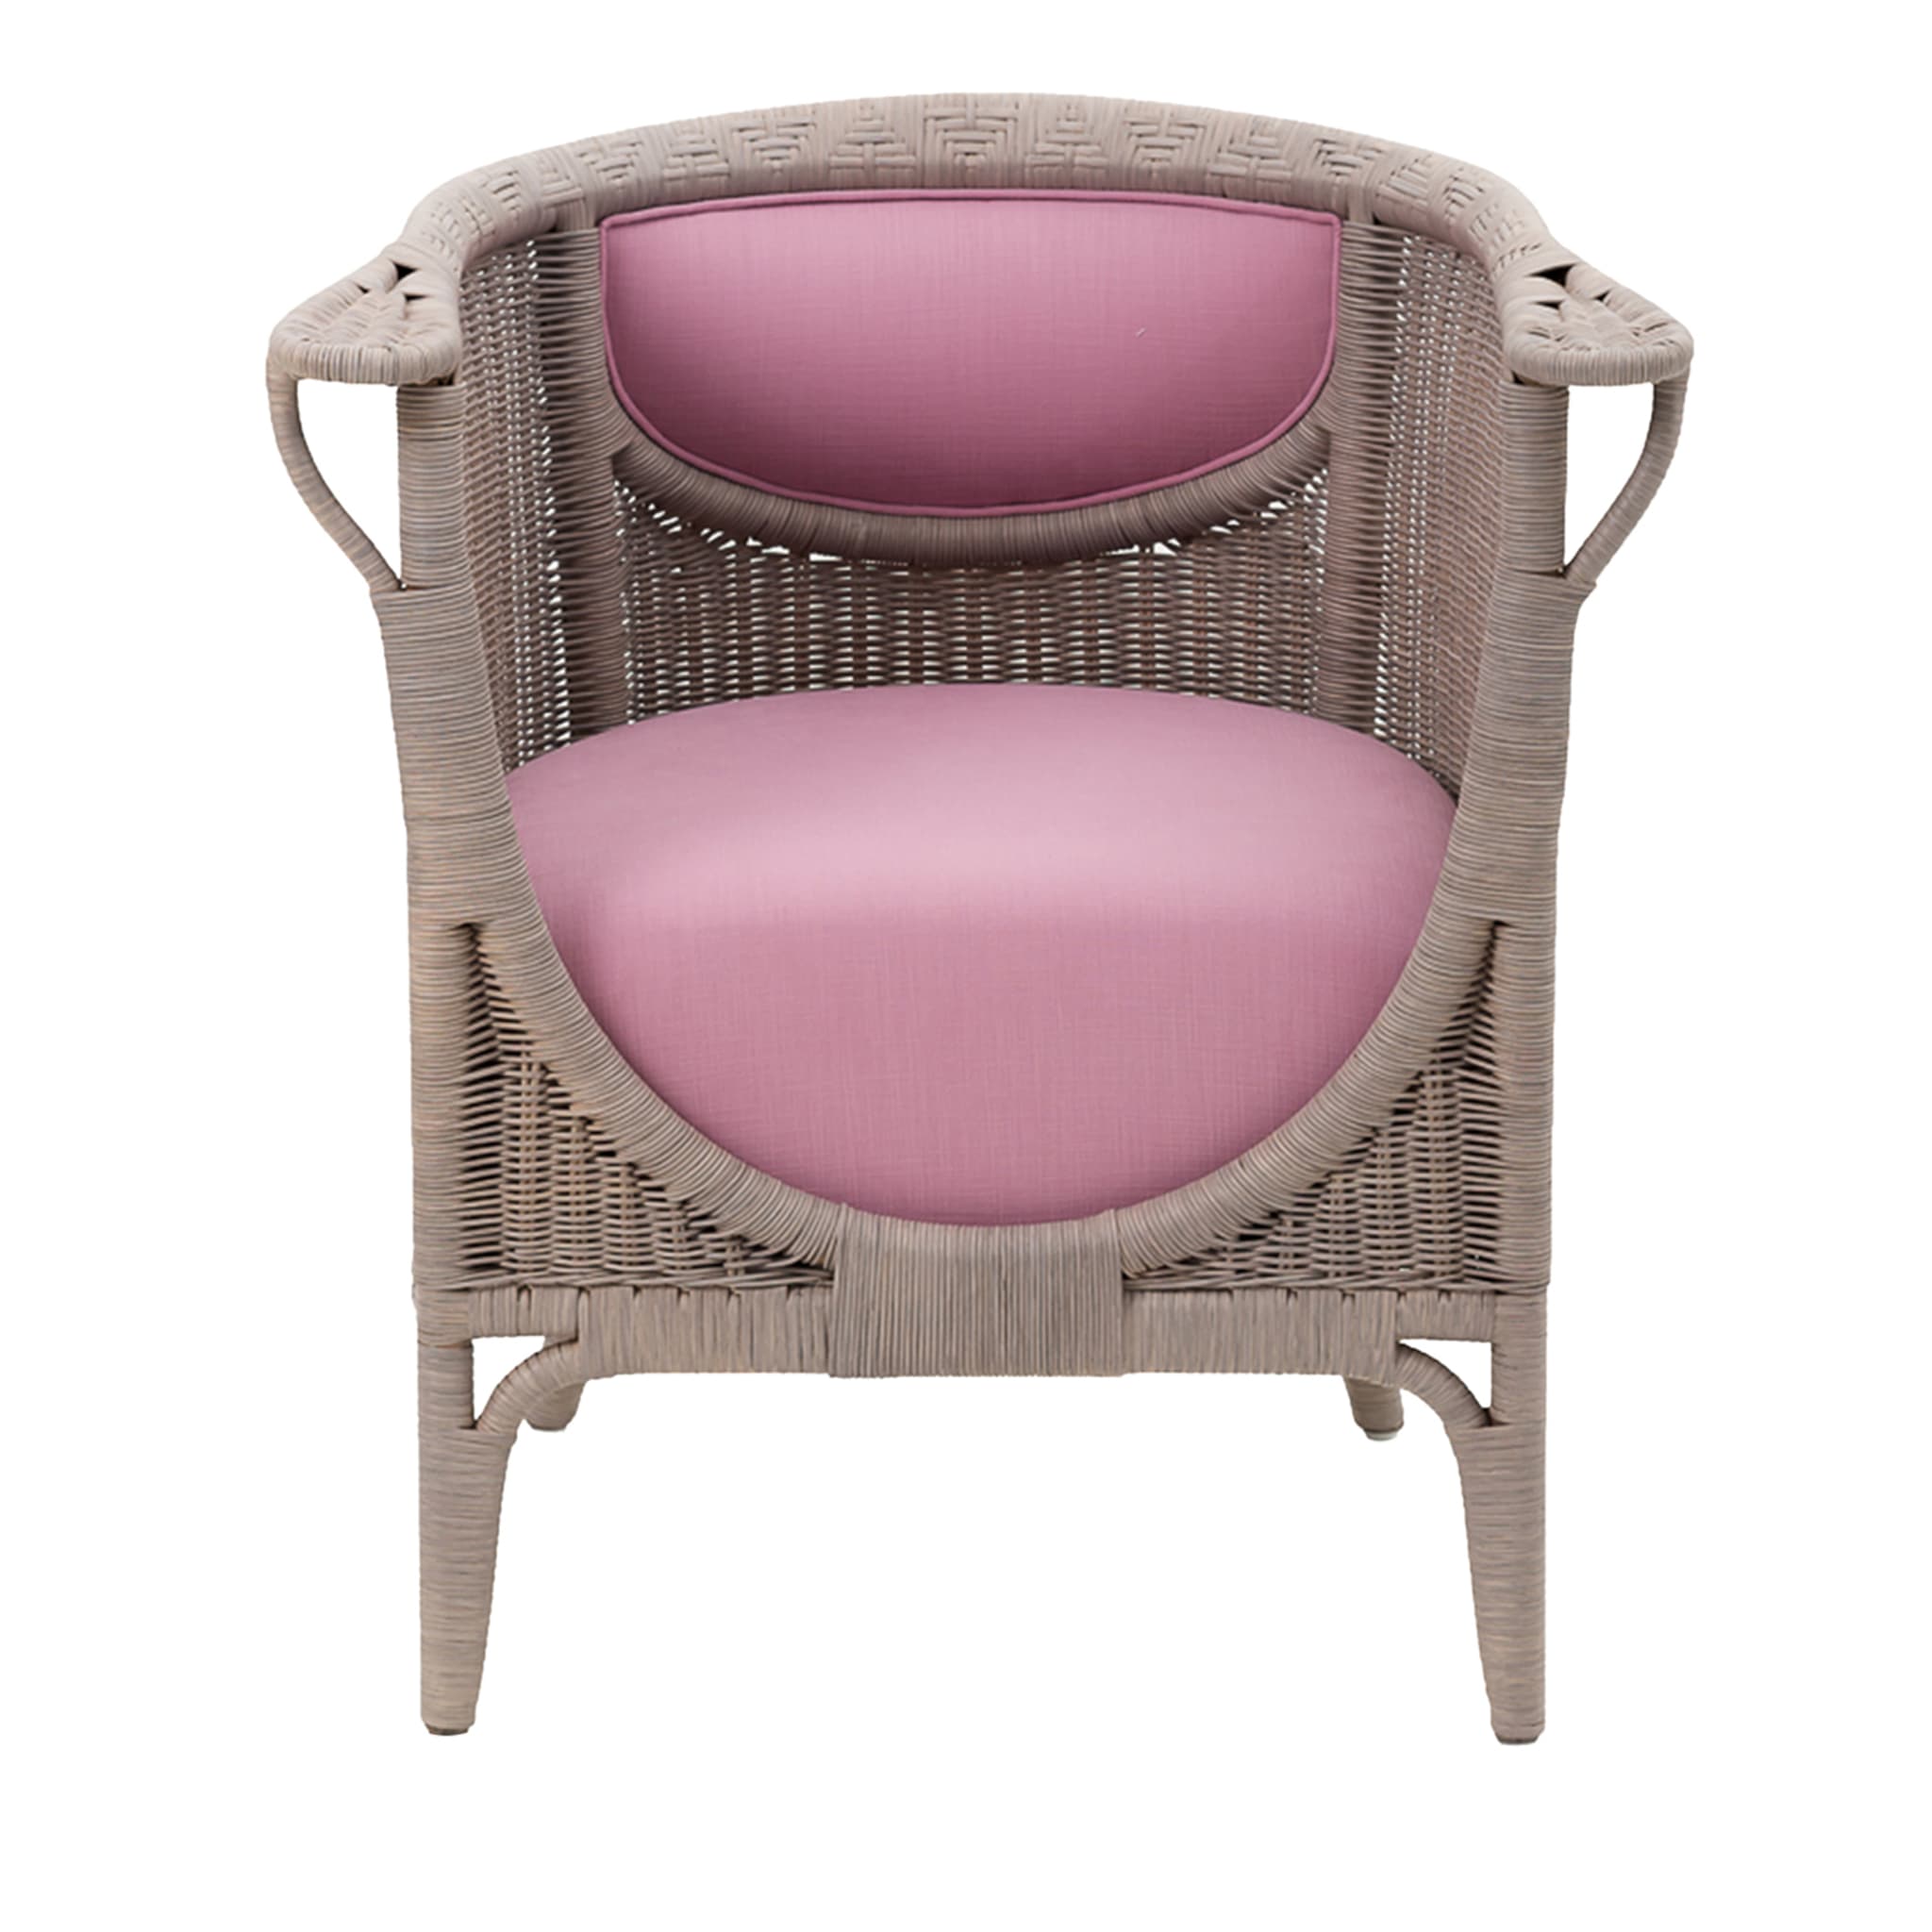 Angelina Pink Rattan Lounge Chair - Main view